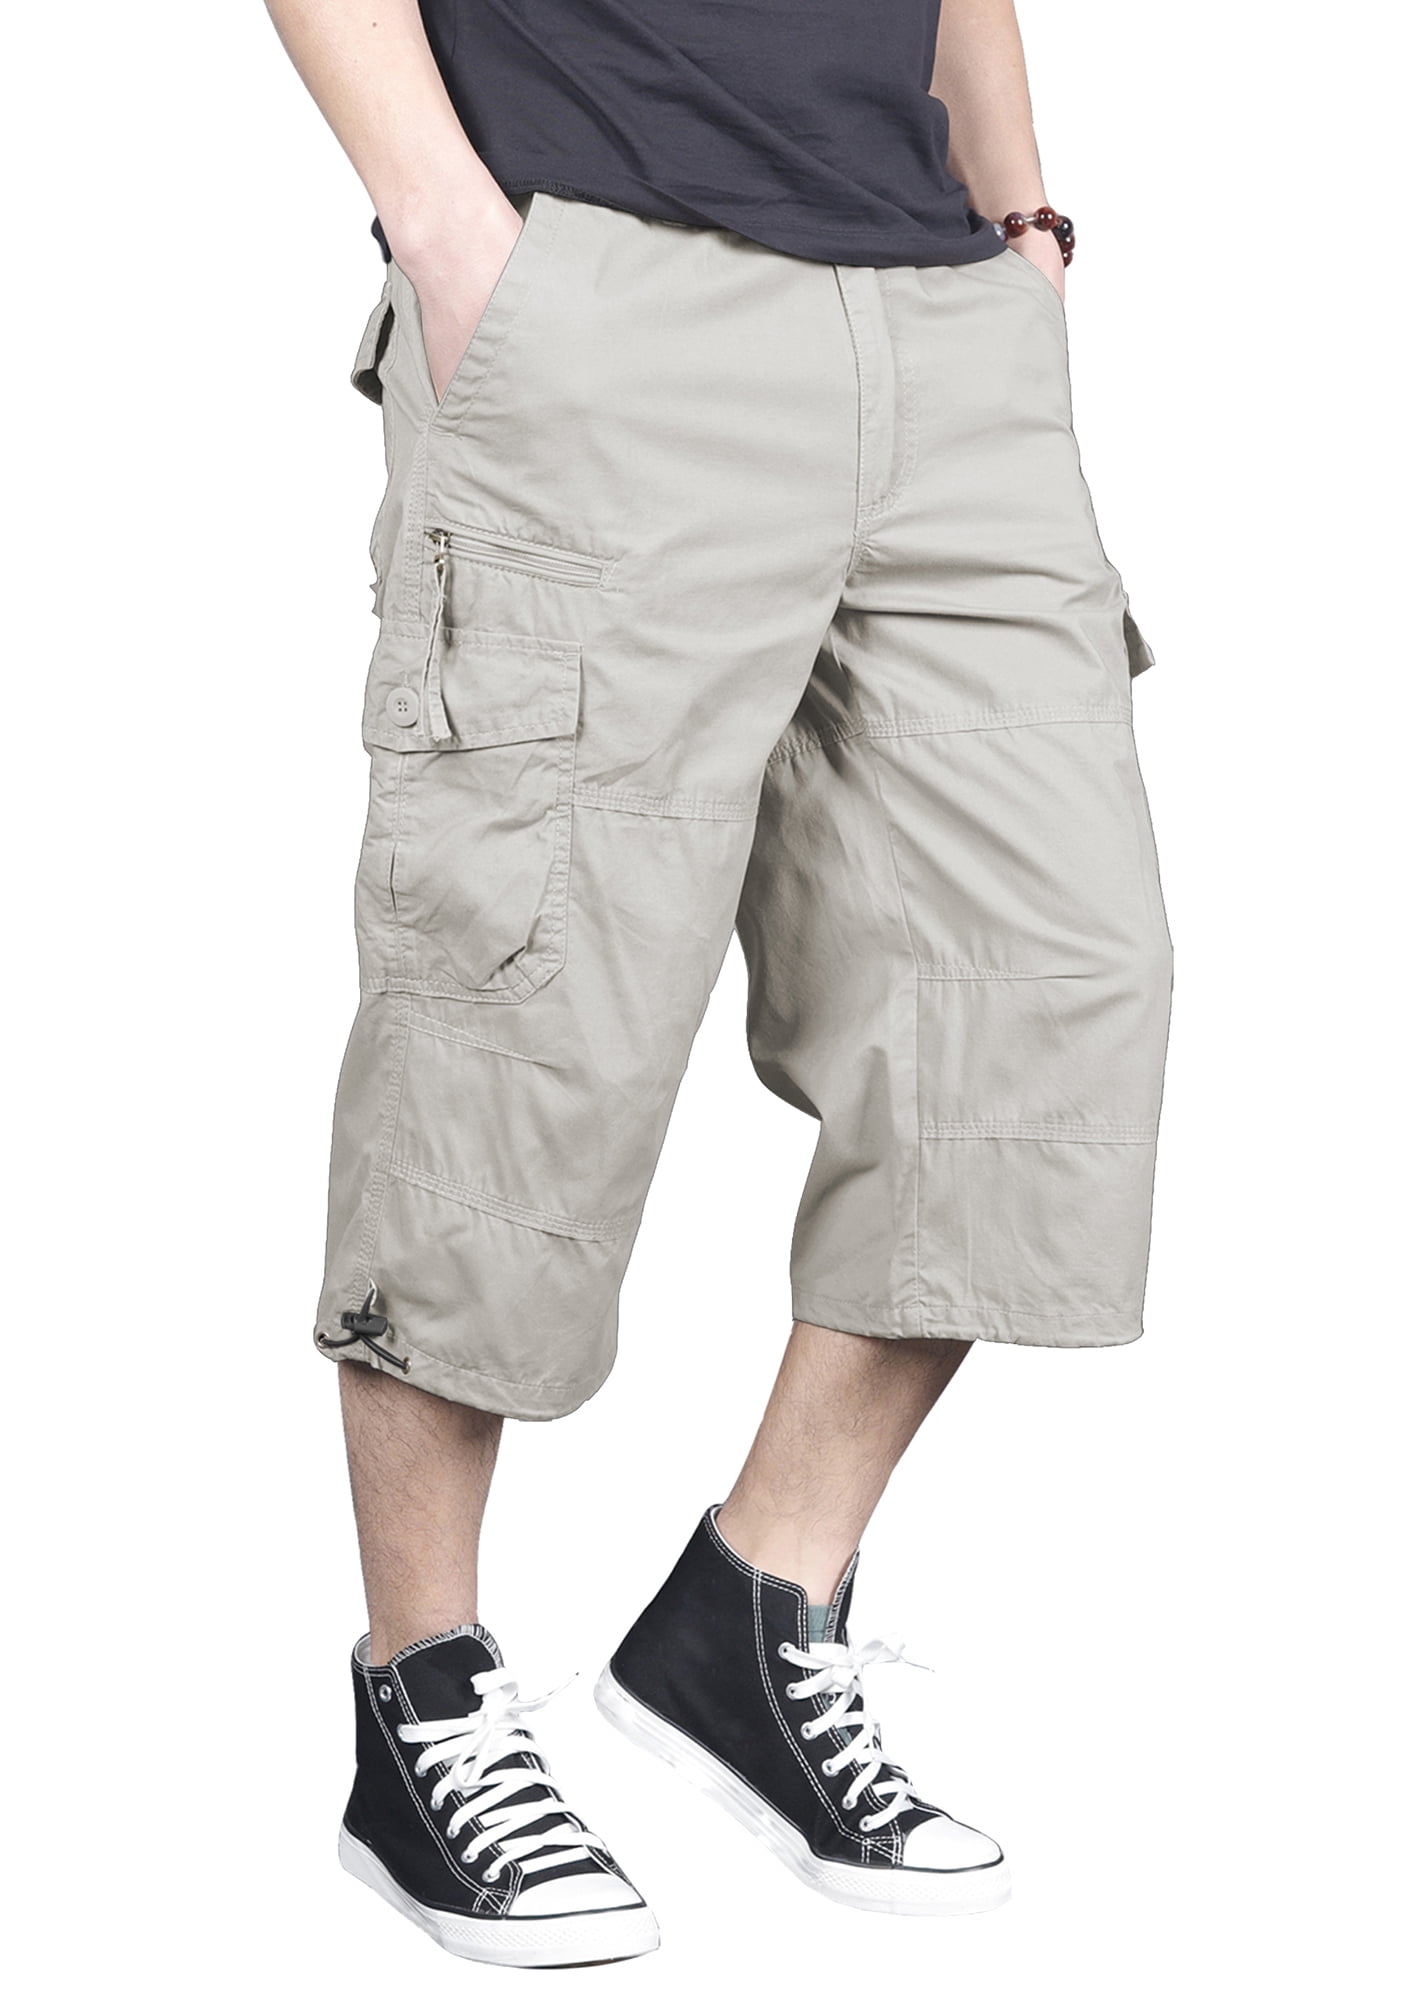 FEDTOSING Mens Casual Cargo Long Shorts Cotton Capri Pants Knee Length Shorts with Multi Pockets Elastic Waist 